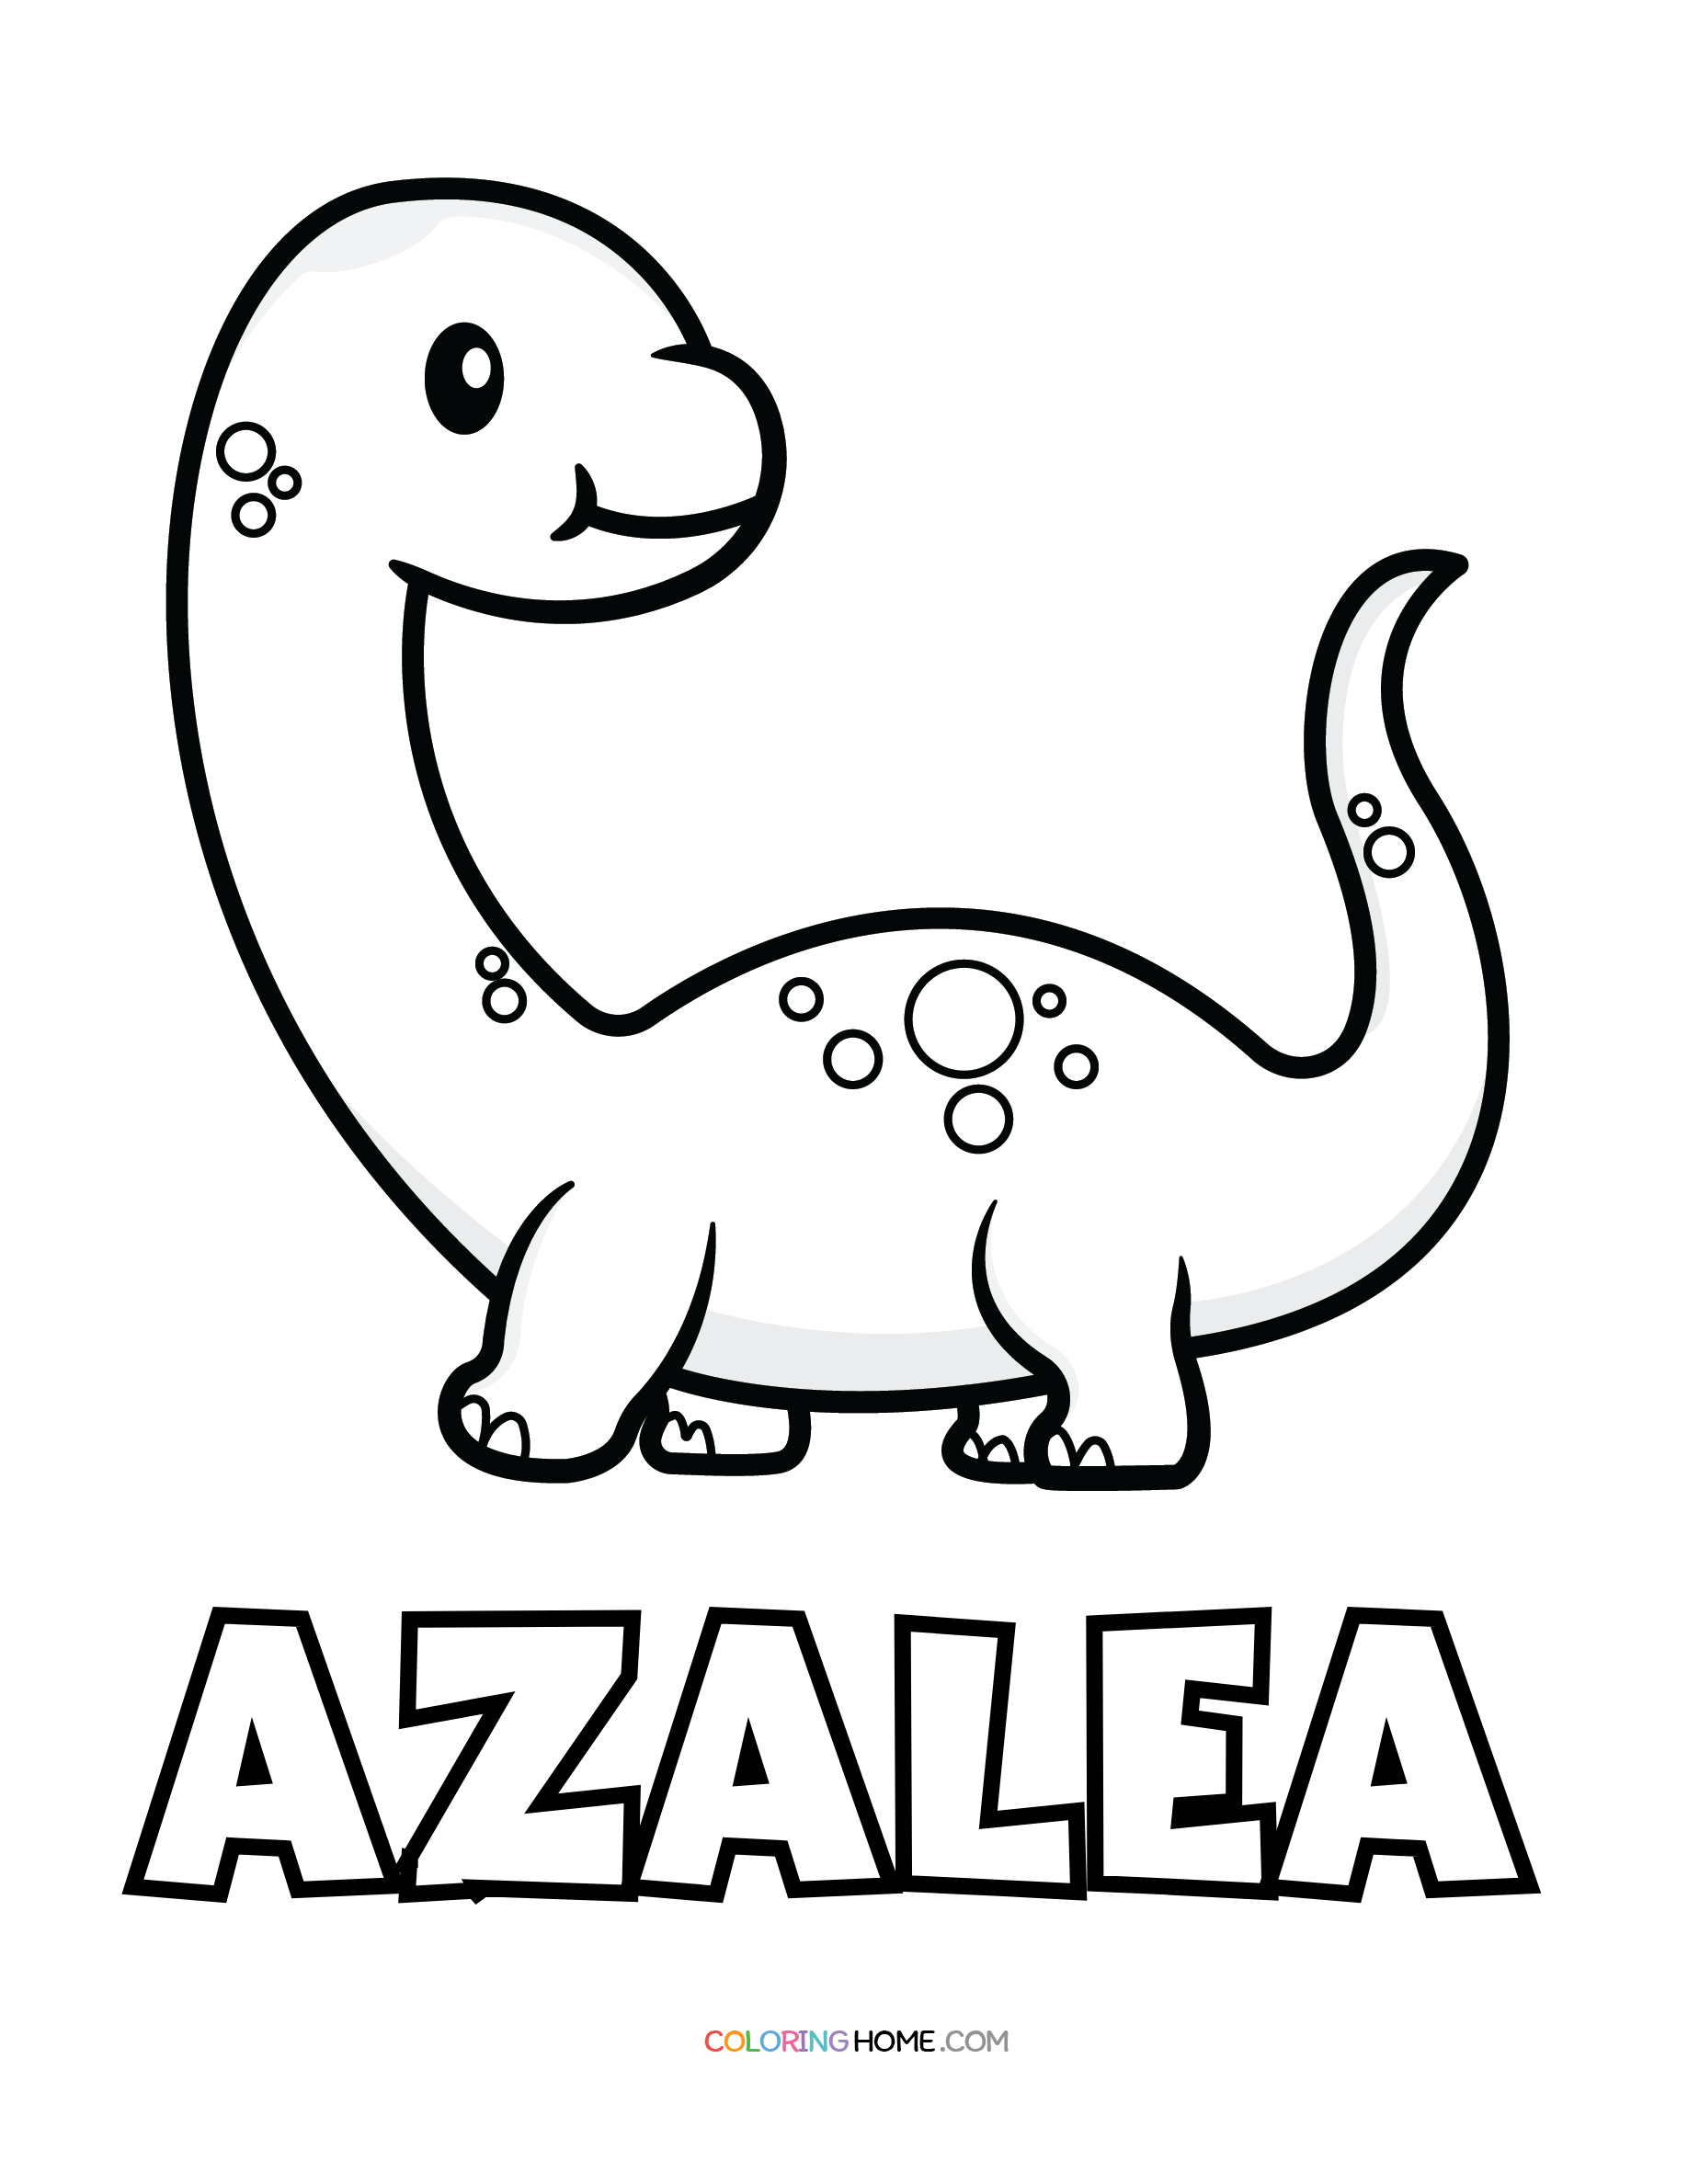 Azalea dinosaur coloring page